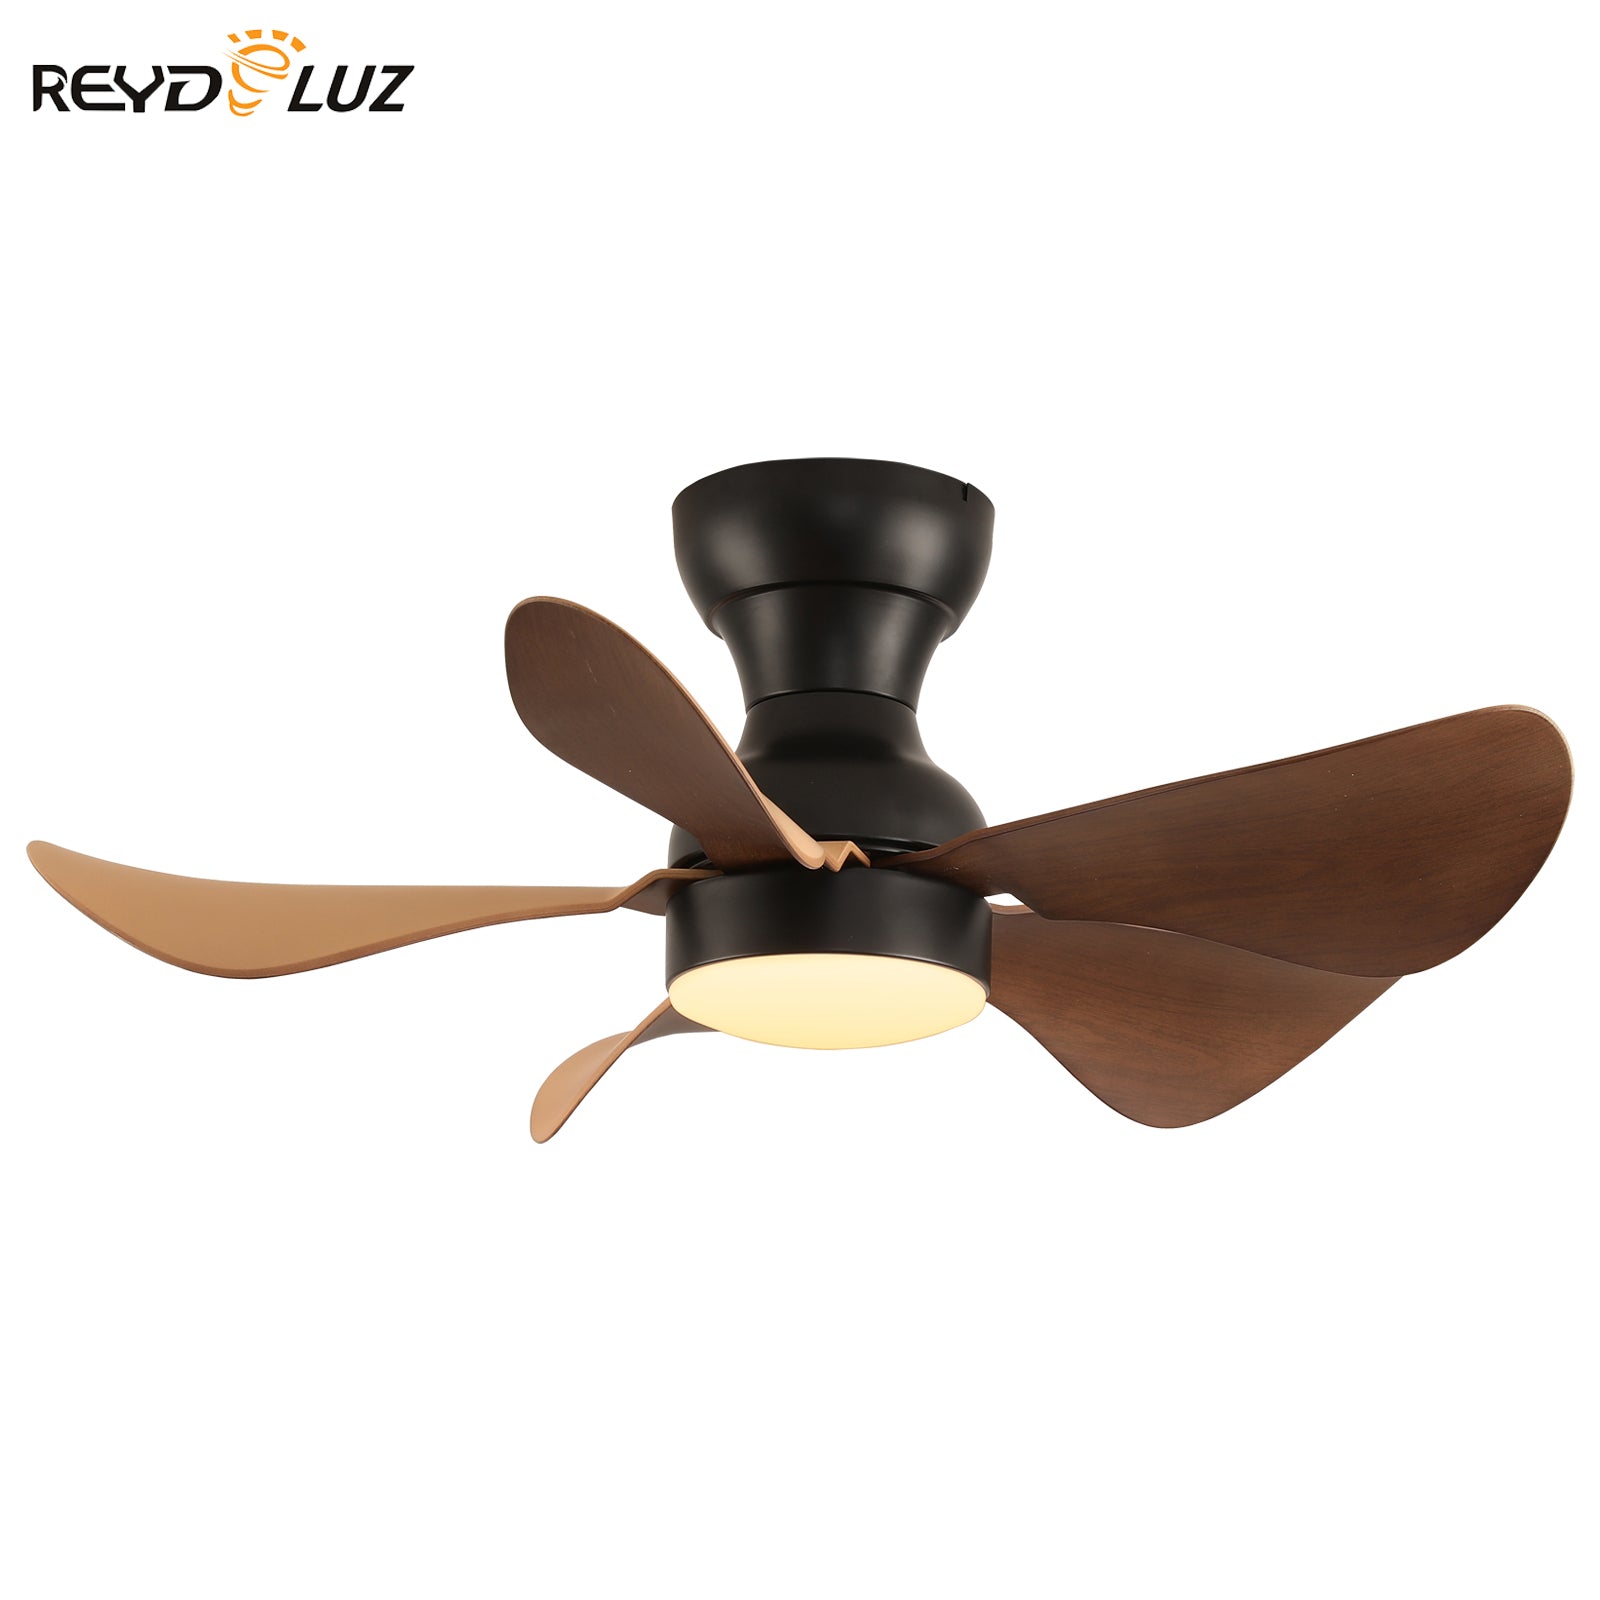 REYDELUZ 30" Ceiling Fan with Lights for 5 Blades Modern Ceiling Fans for Indoor.